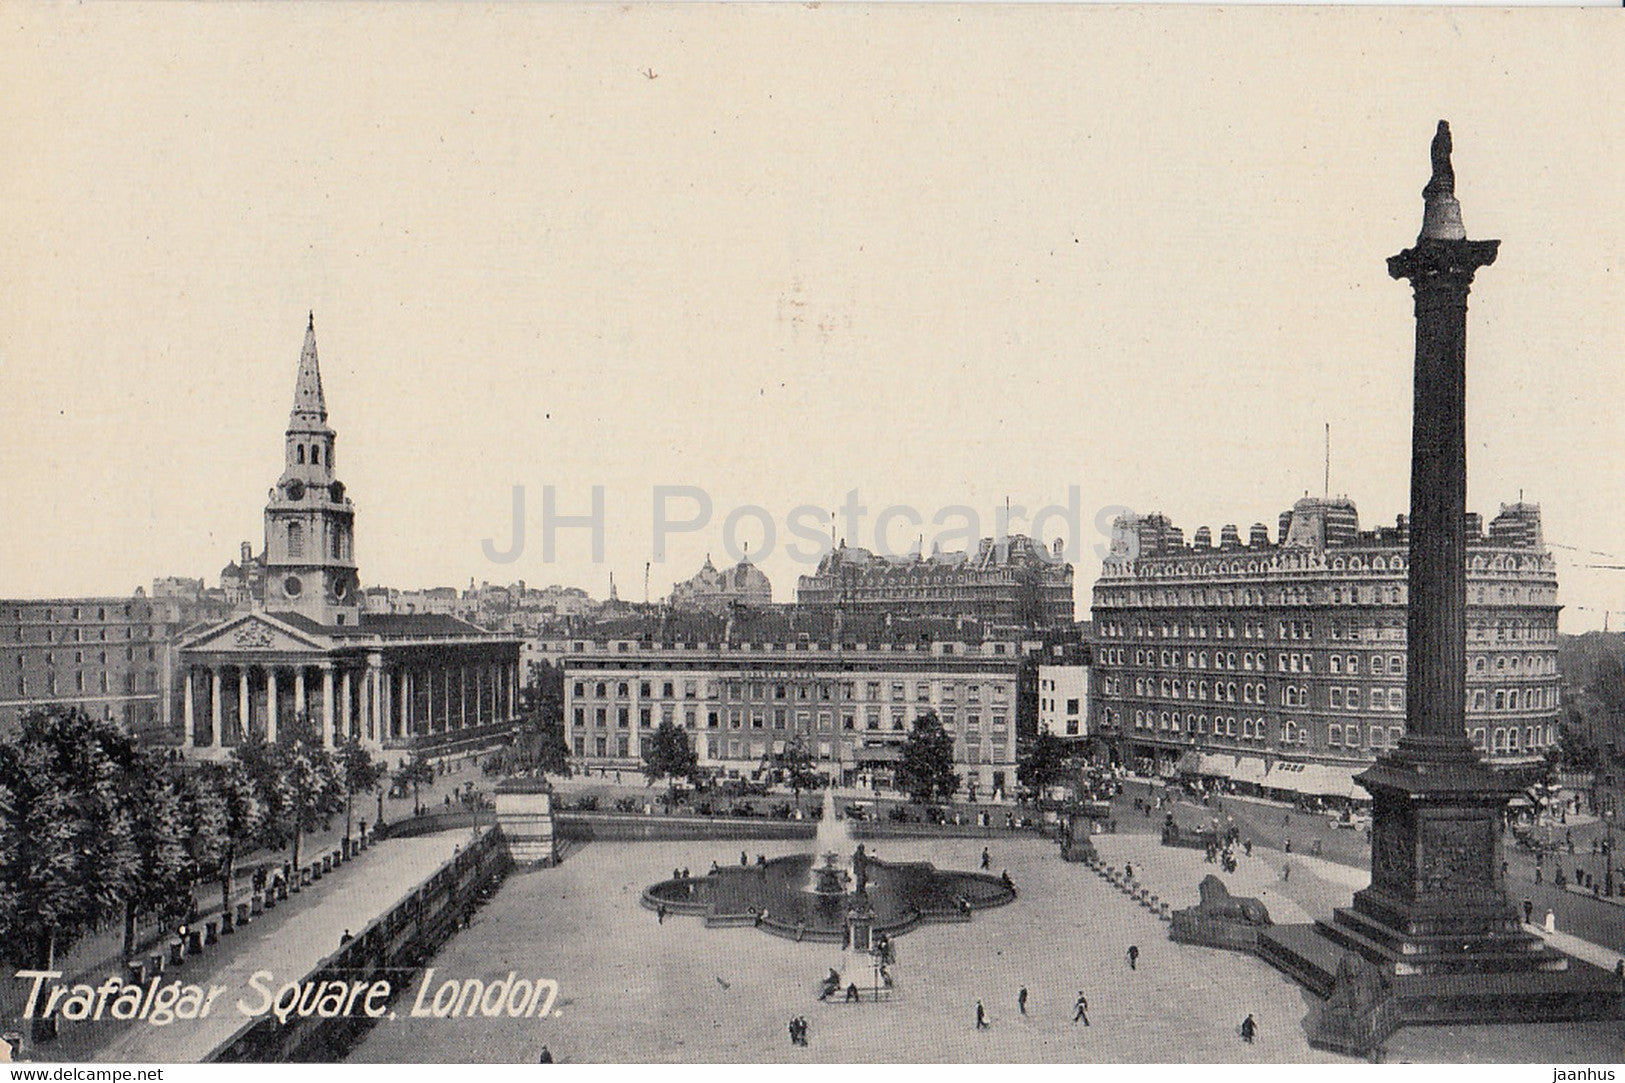 London - Trafalgar Square - The Classical Series - old postcard - England - United Kingdom - unused - JH Postcards